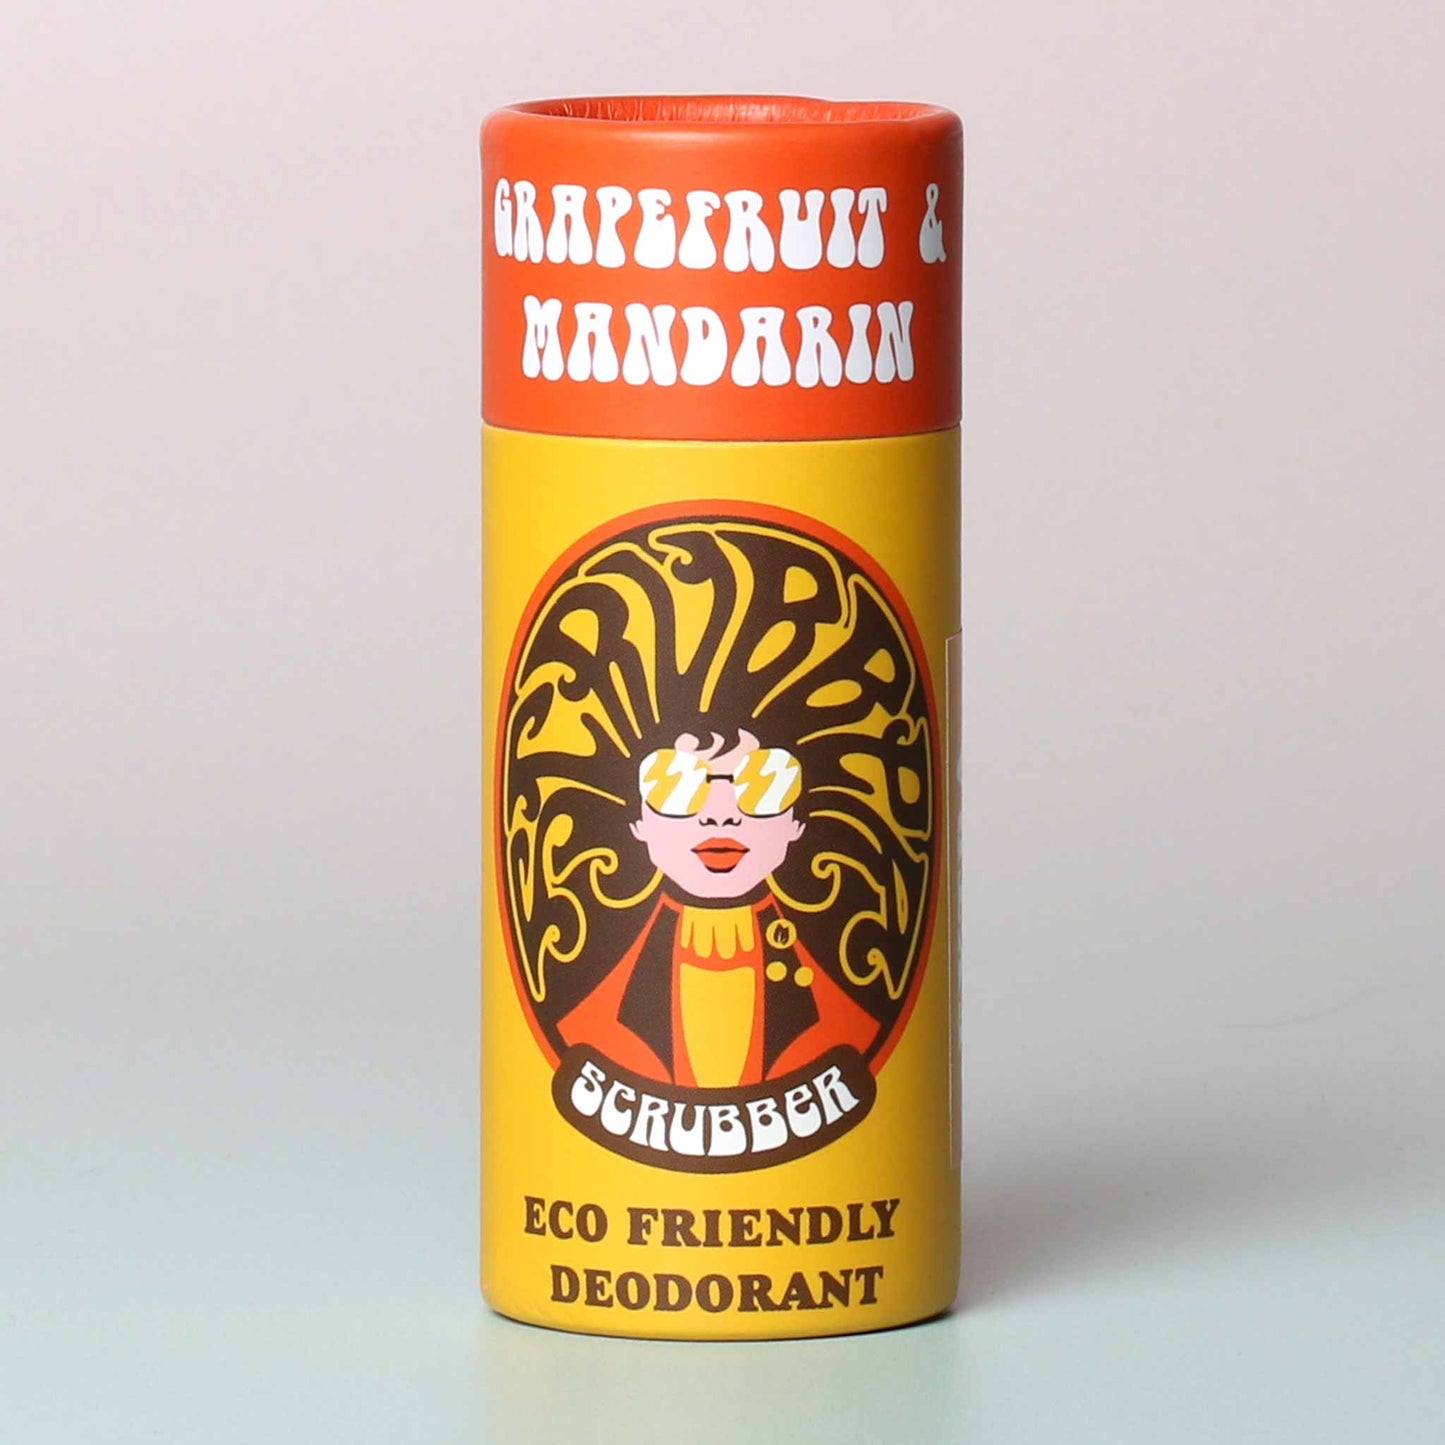 Scrubber Grapefruit & Mandarin Deodorant Stick